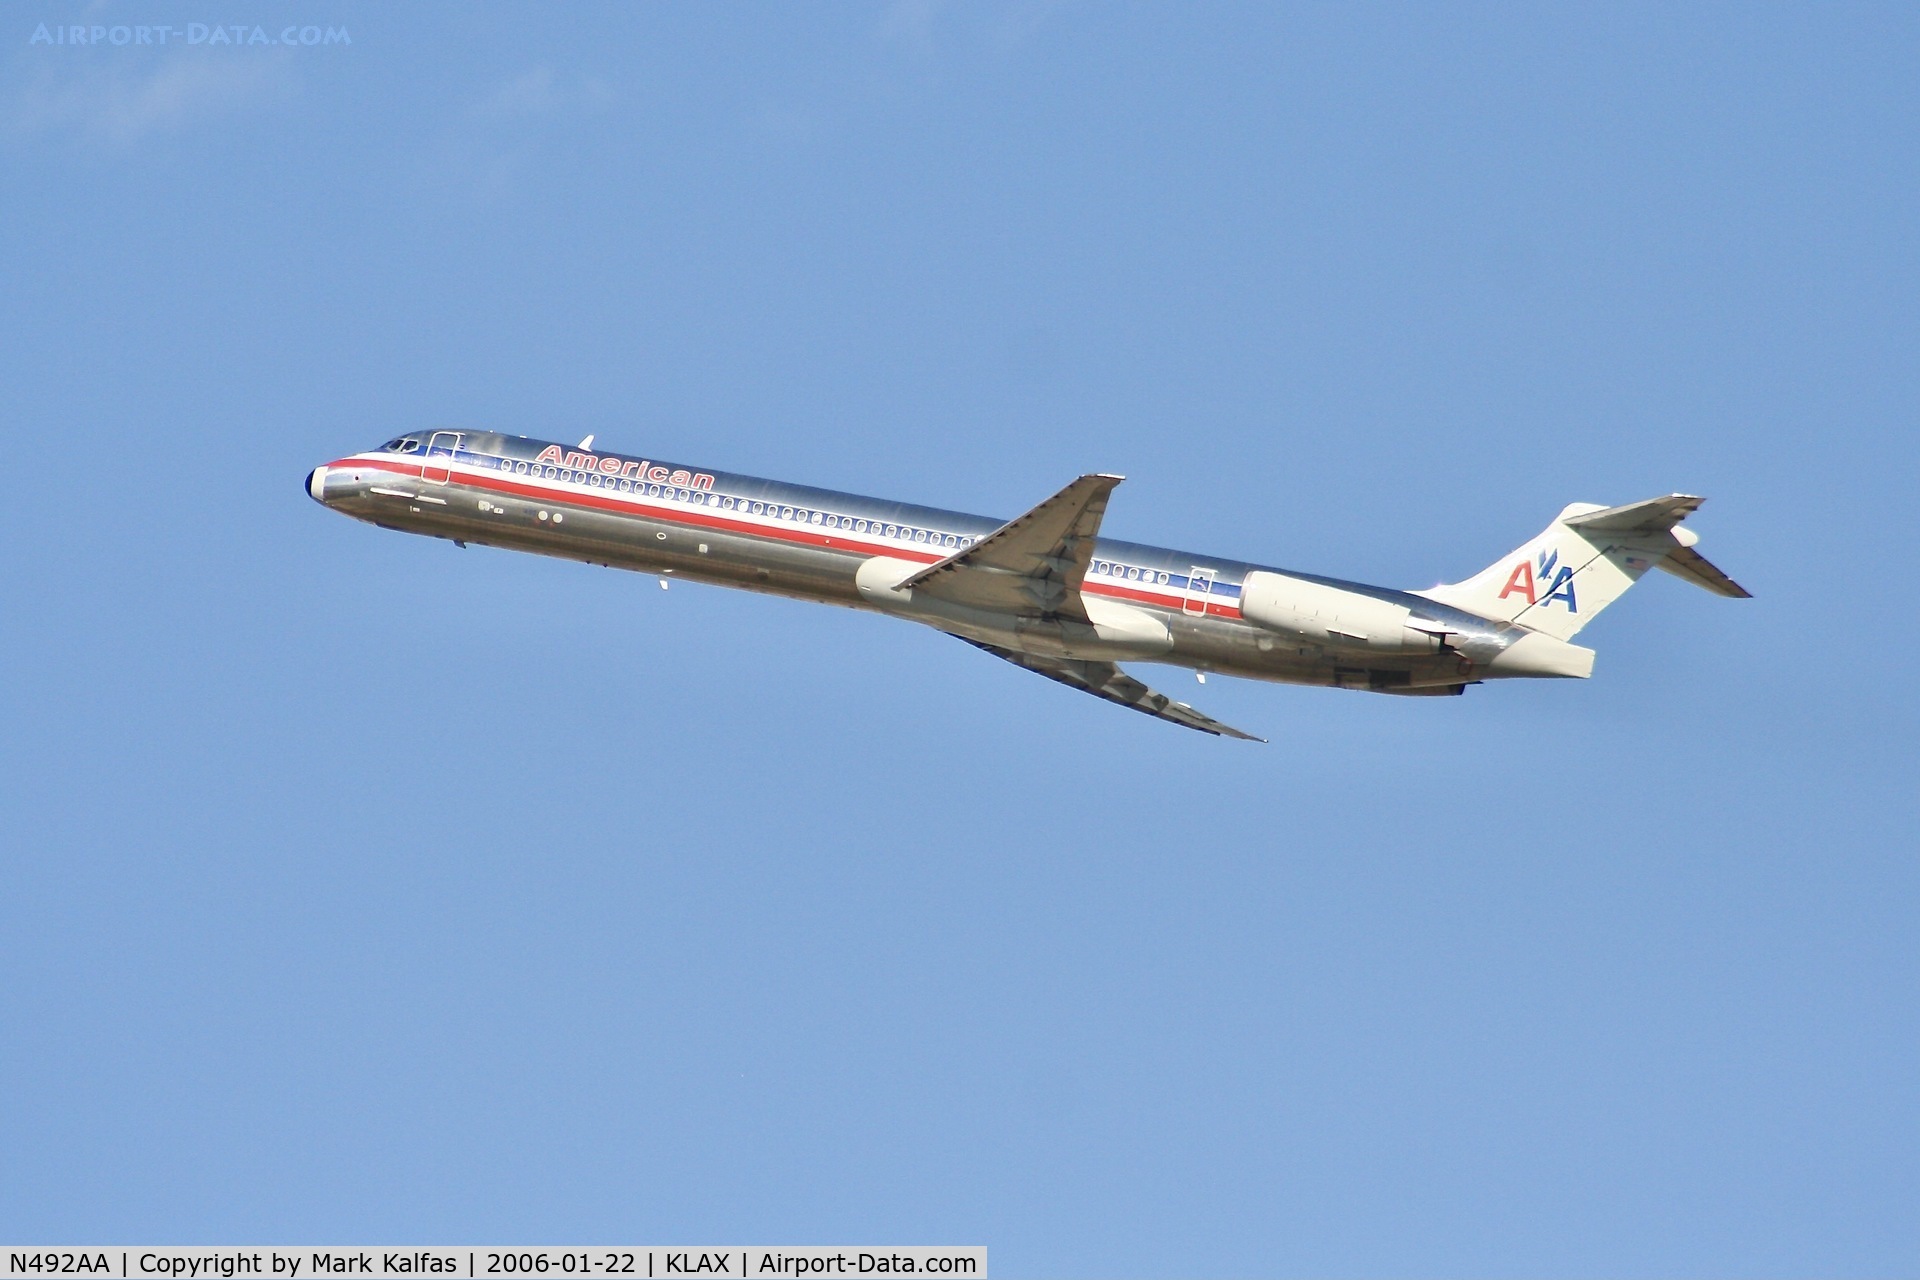 N492AA, 1989 McDonnell Douglas MD-82 (DC-9-82) C/N 49730, American Airlines McDonnell Douglas MD-82, N492AA departing 25R LAX